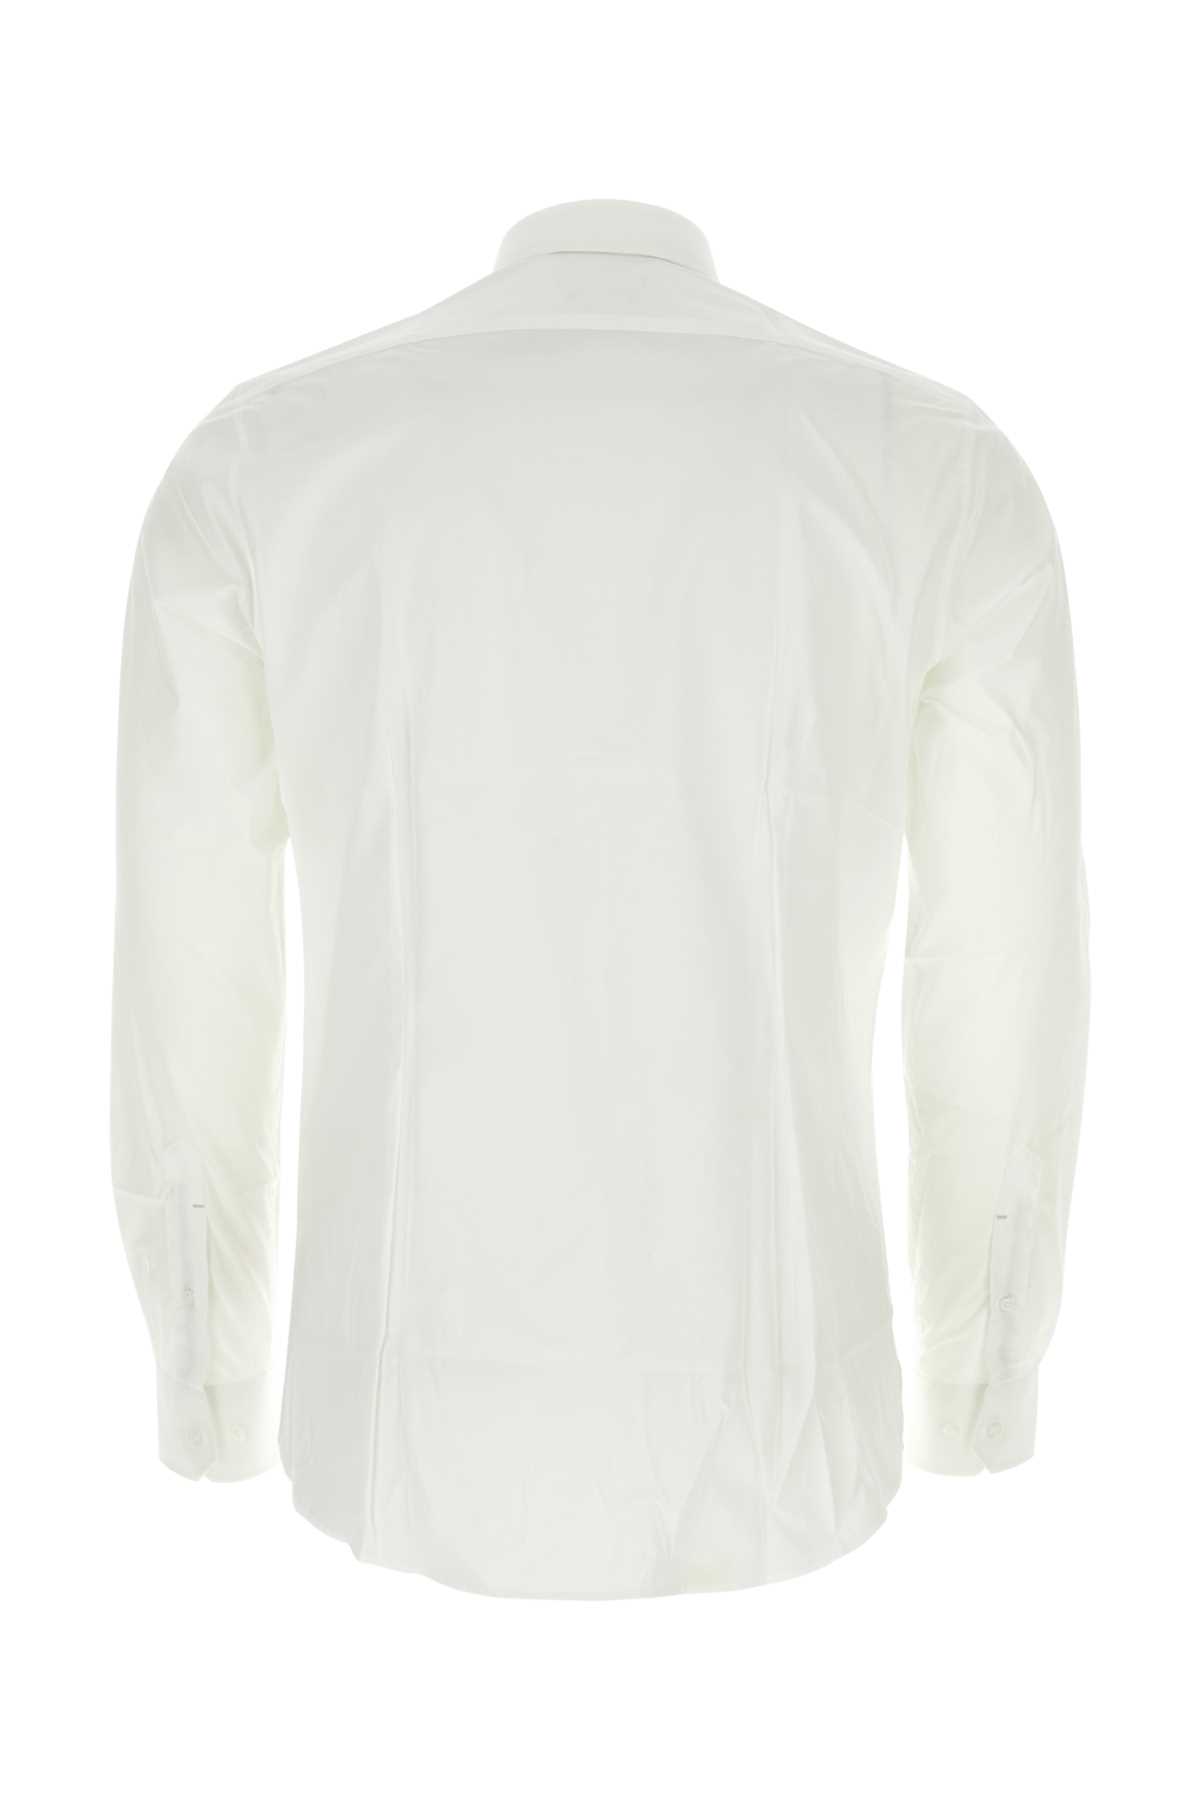 Michael Kors White Stretch Cotton Shirt